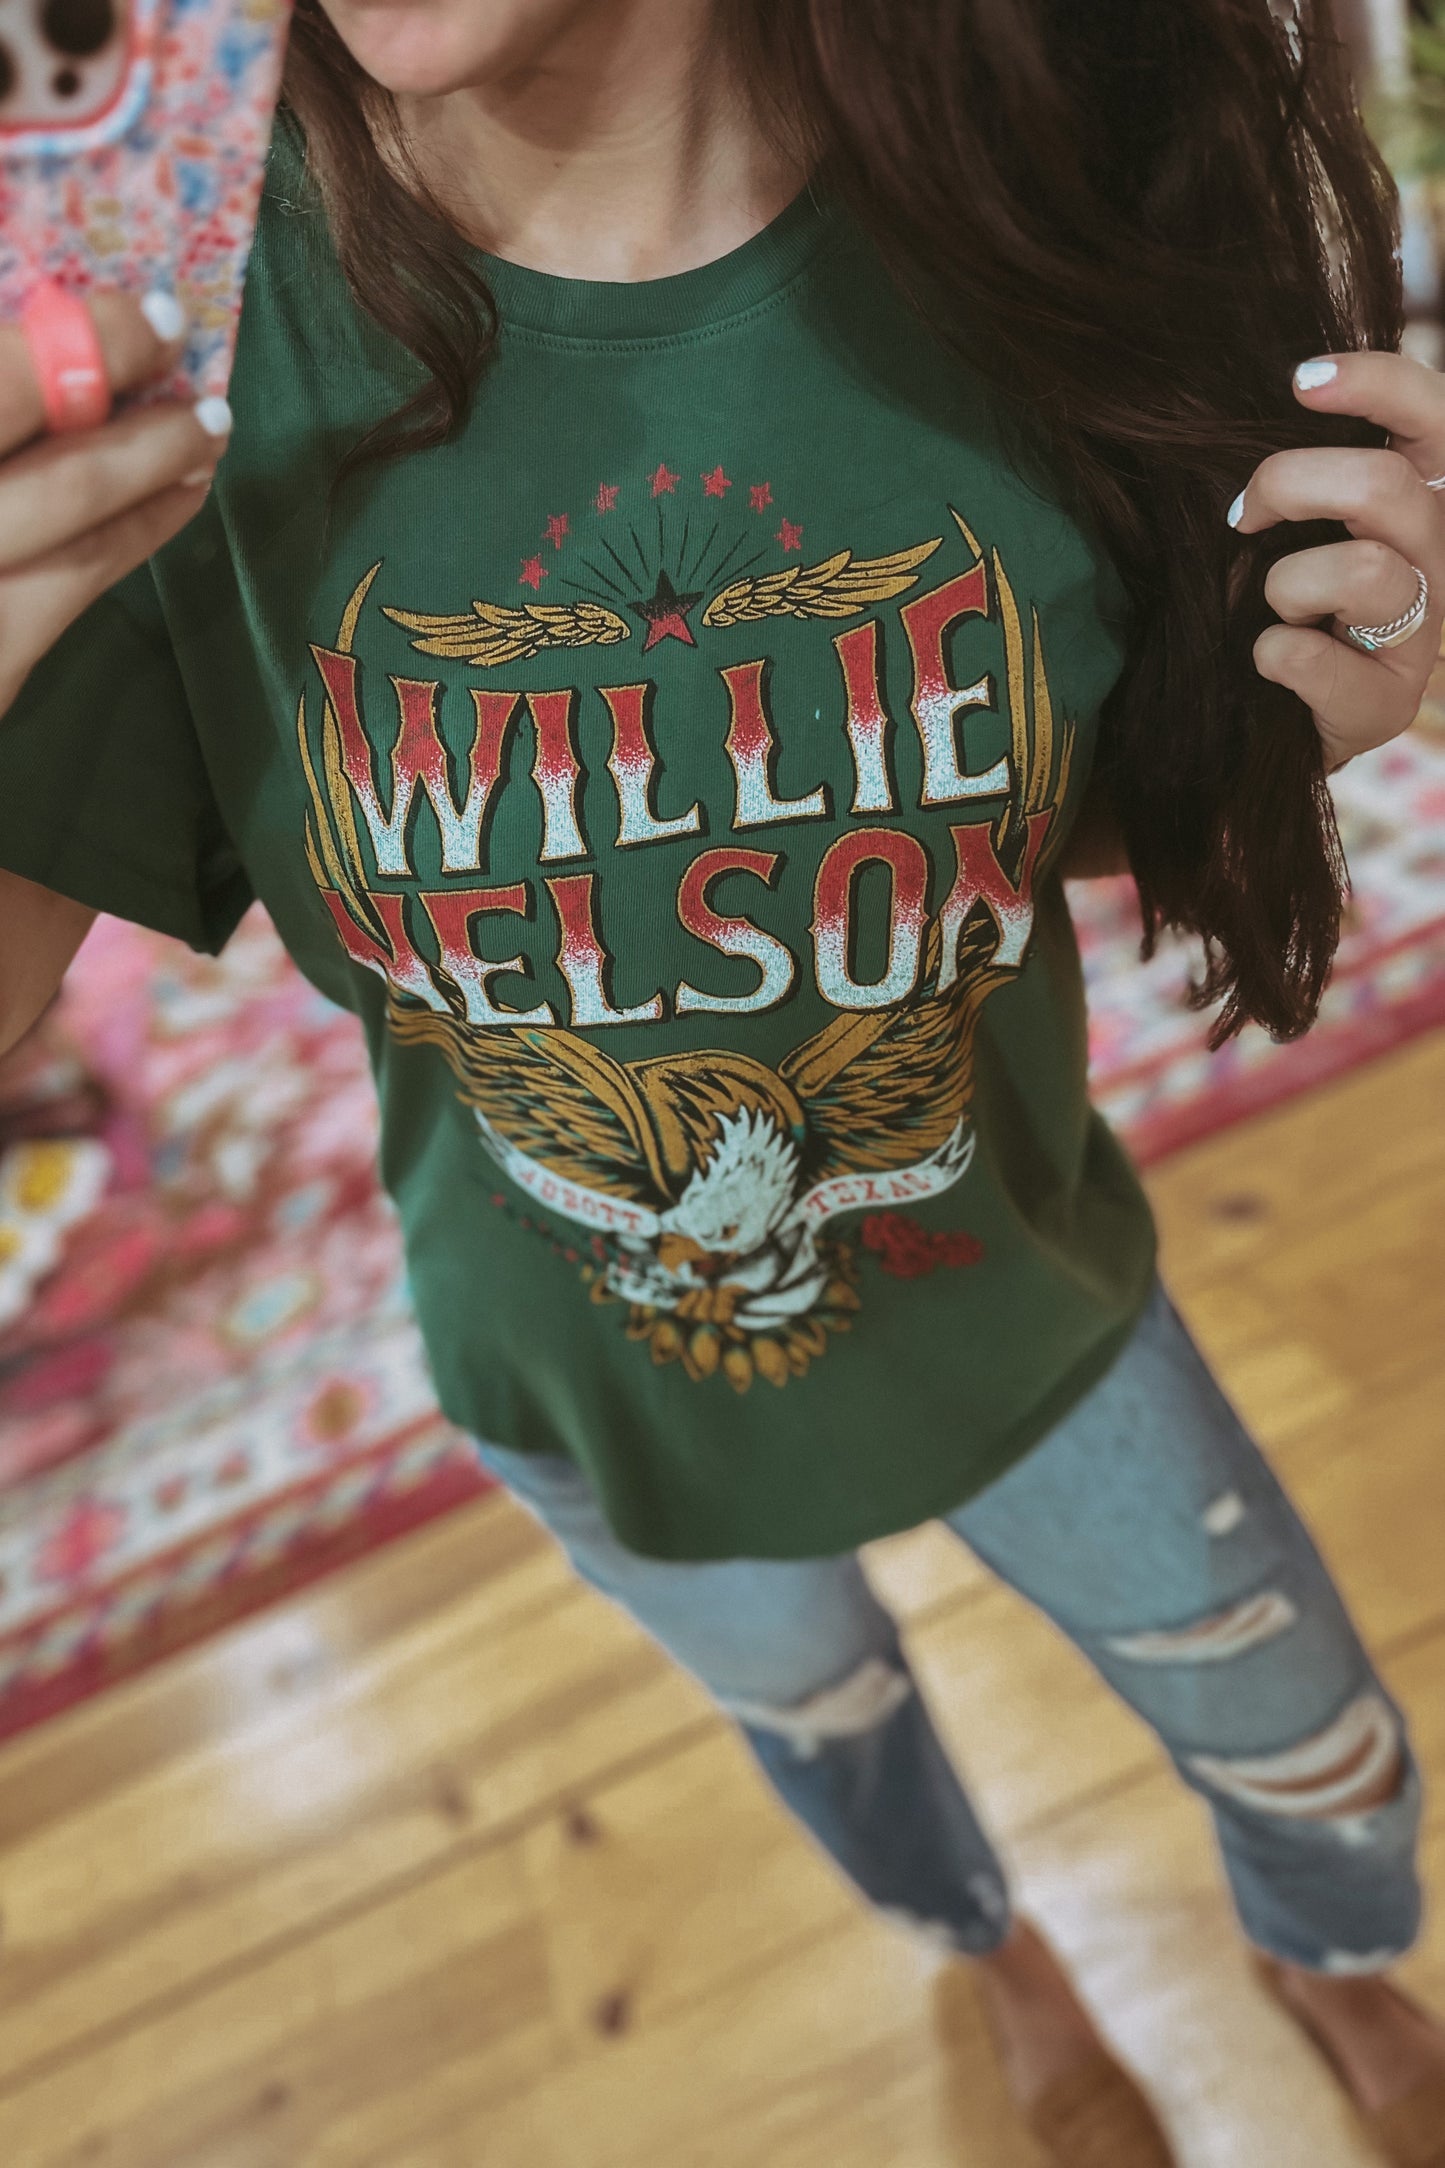 Willie Nelson Abbott Texas Tour Tee